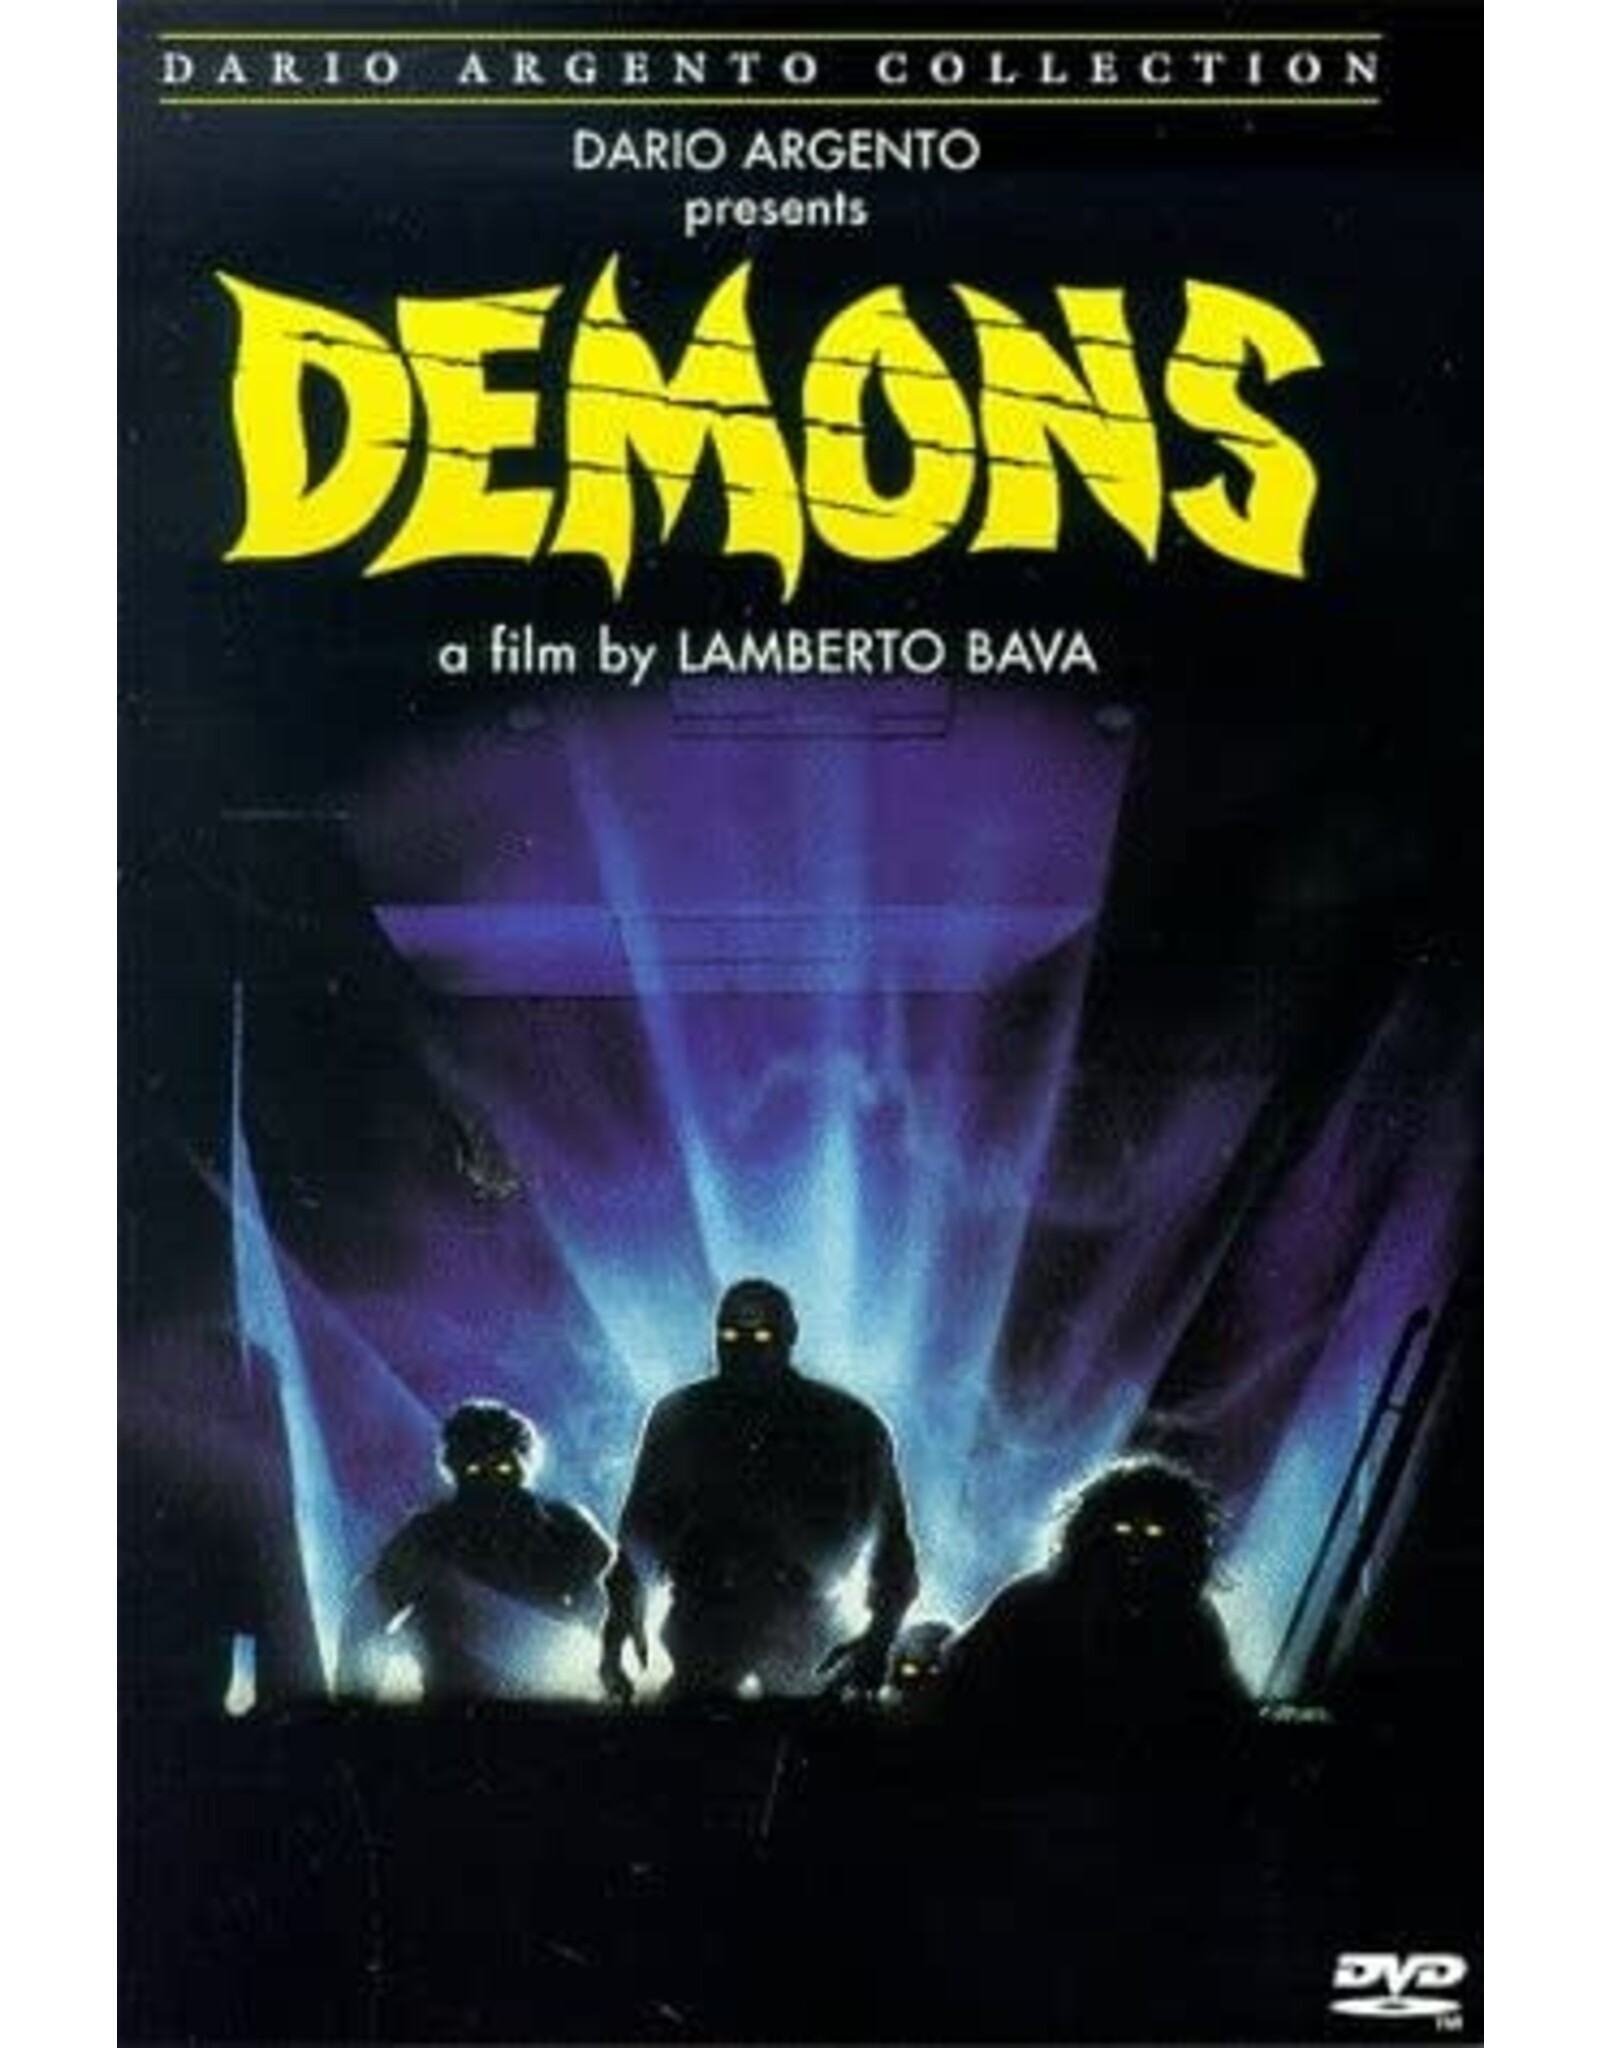 Horror Demons Dario Argento Collection - Anchor Bay (Used)